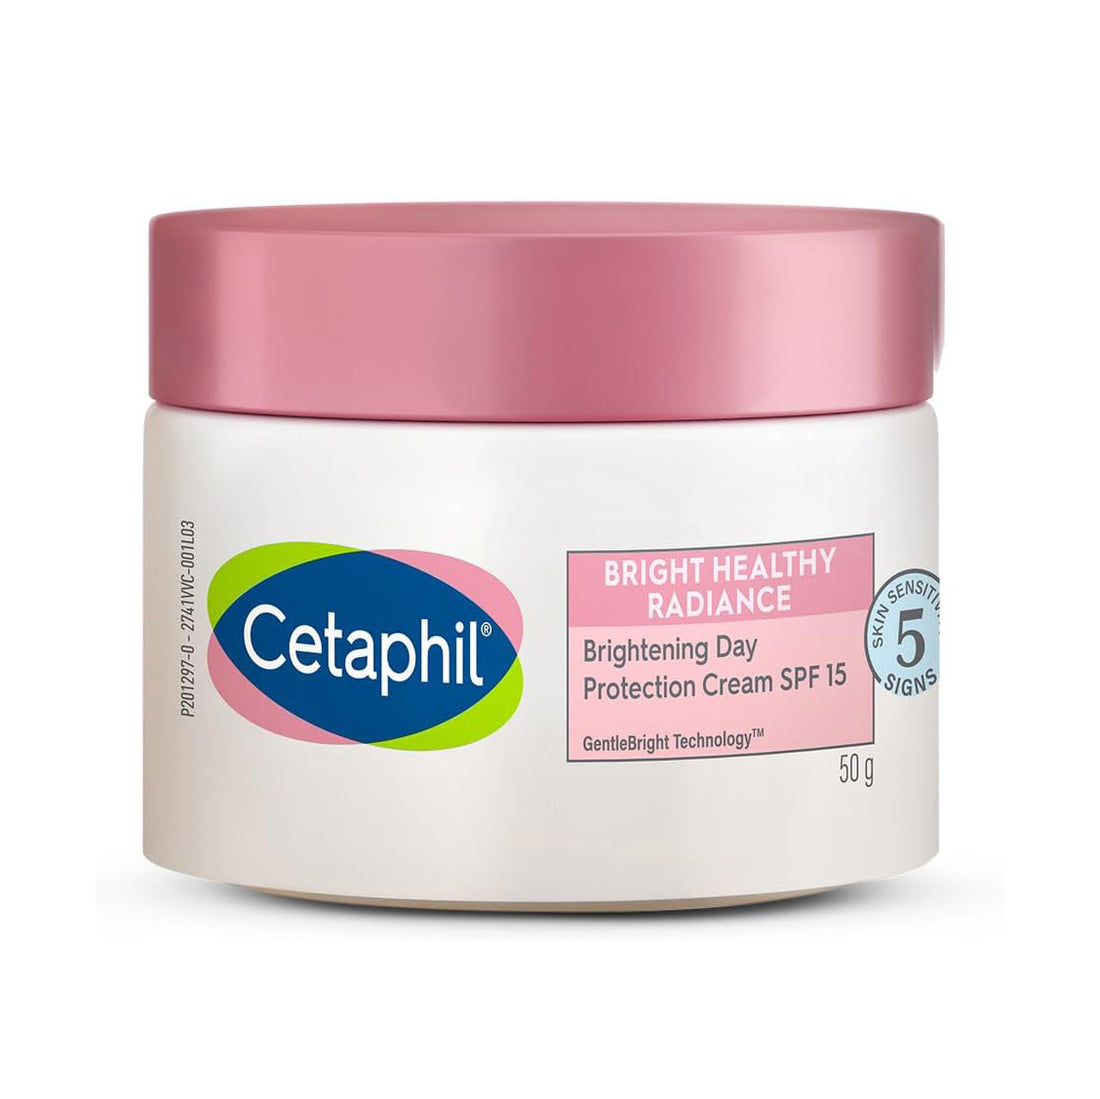 Cetaphil Brightening Day Protection Cream SPF15 (50gm)